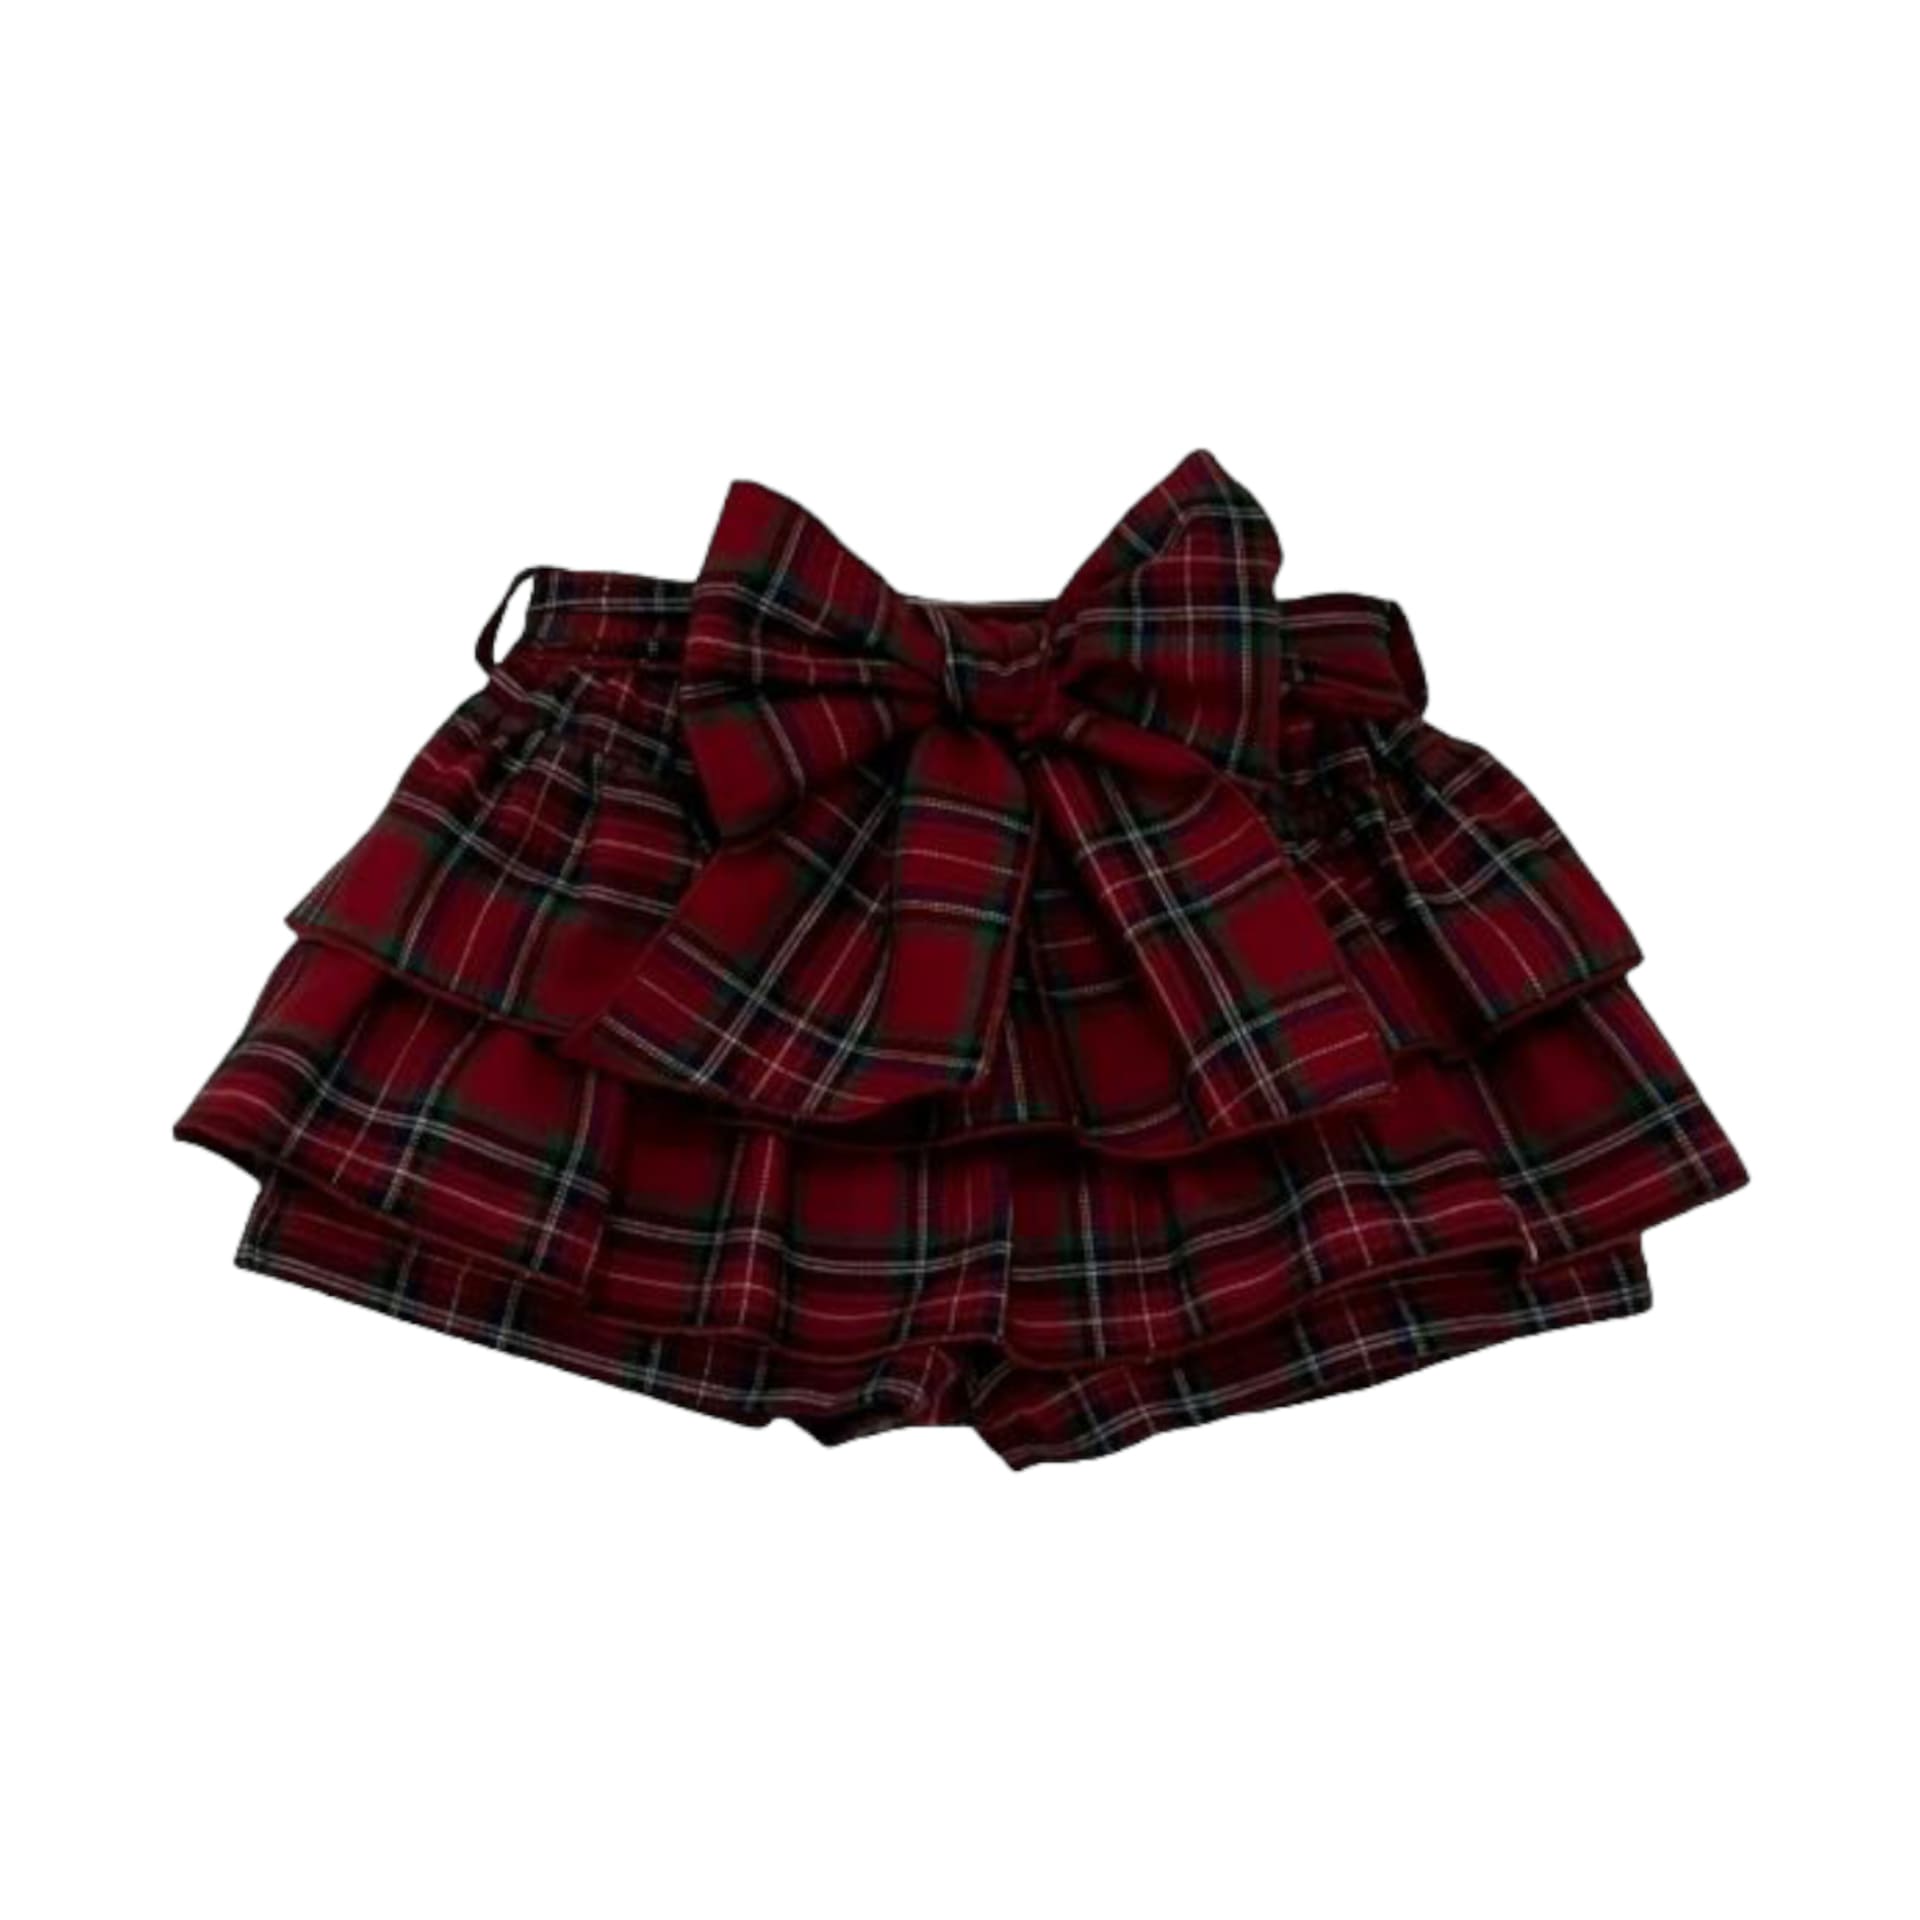 Red tartan frill skirt